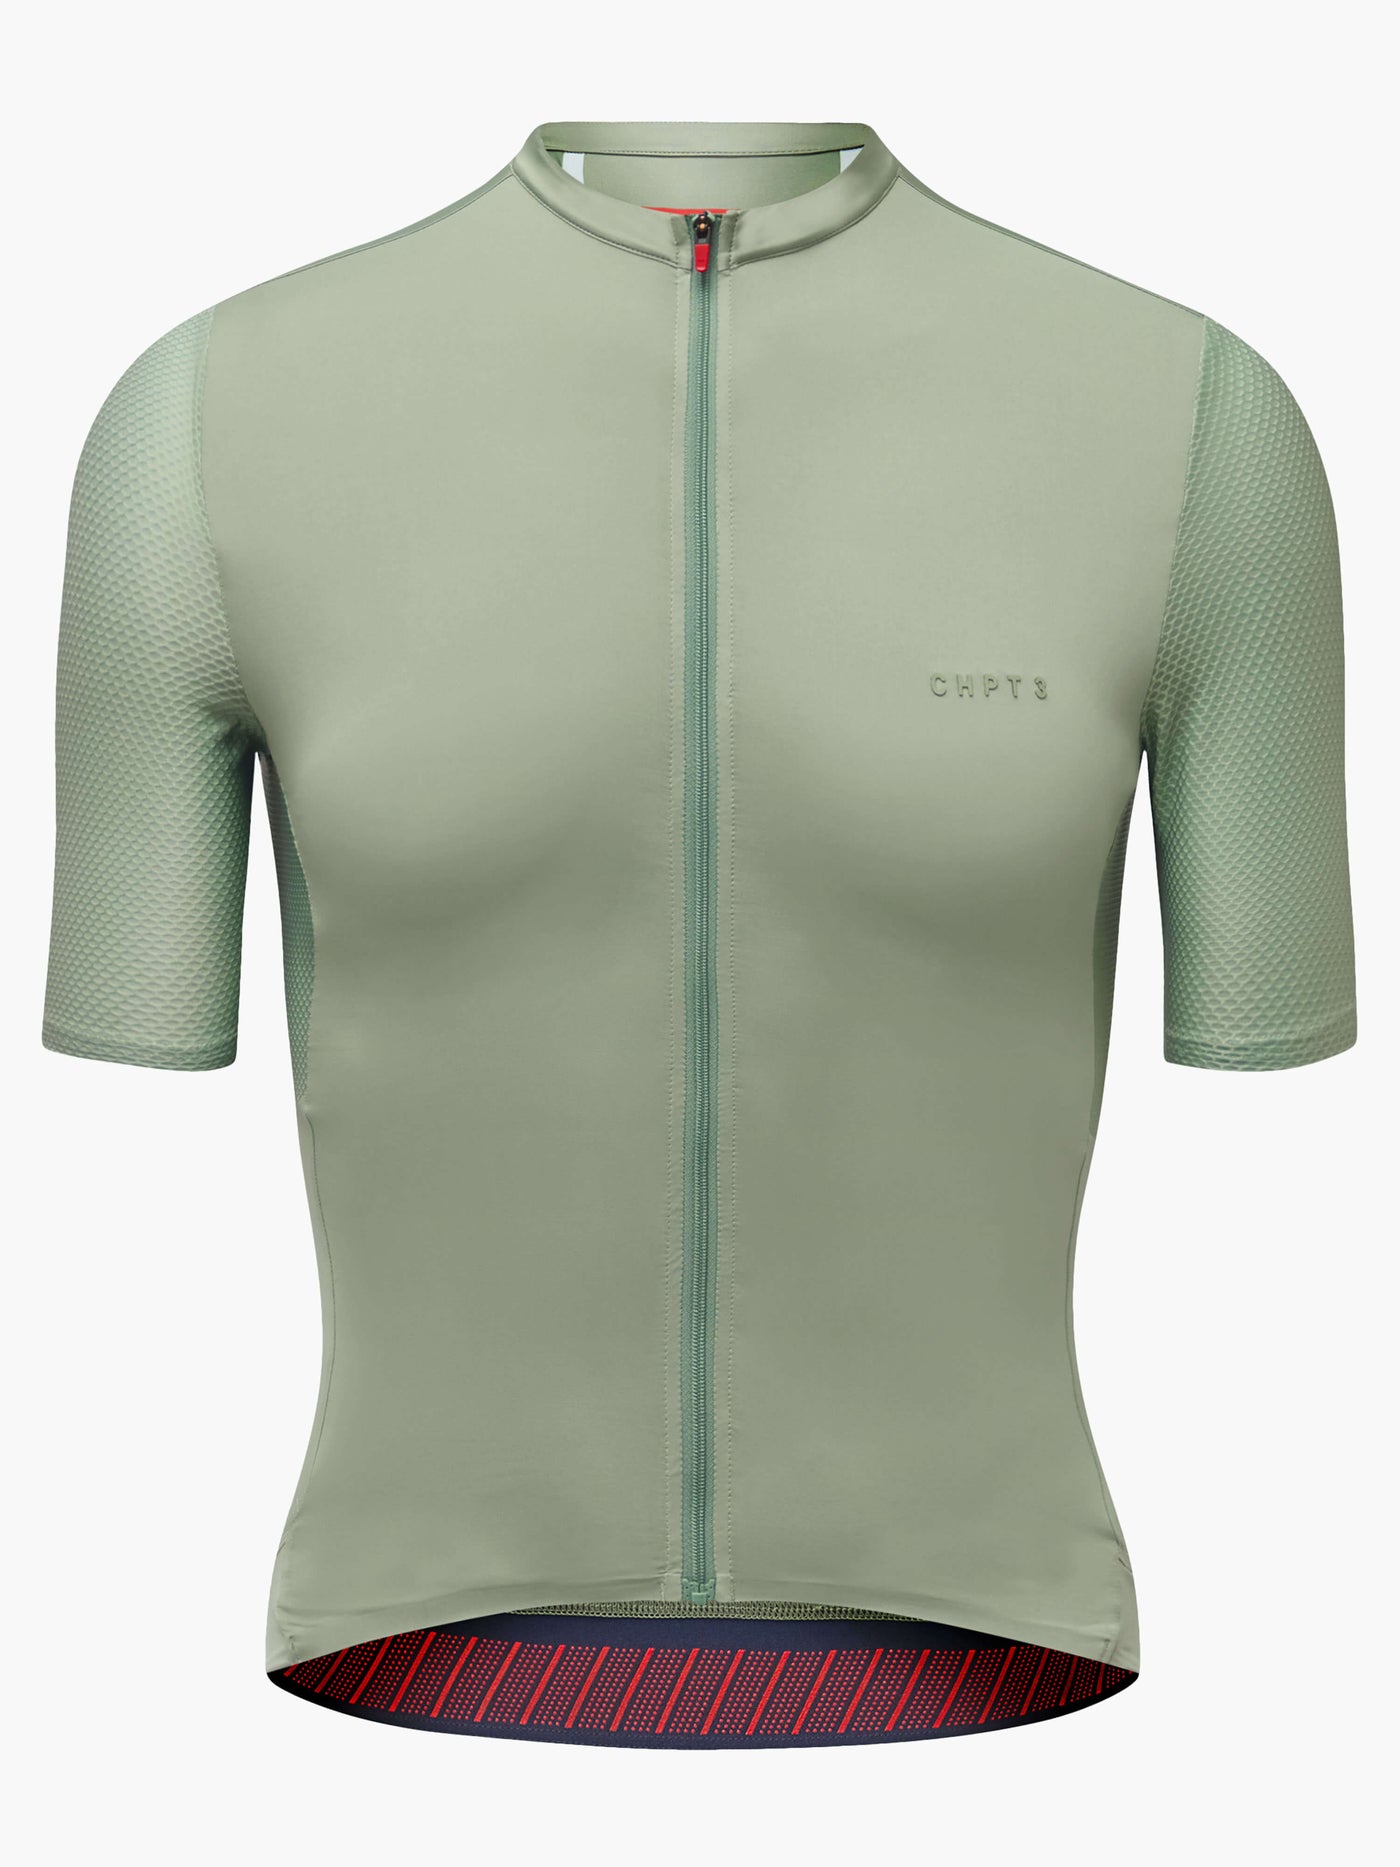 CHPT3 Men's Aero short sleeve jersey, in Lichen Green, viewed from front. #color_lichen-green